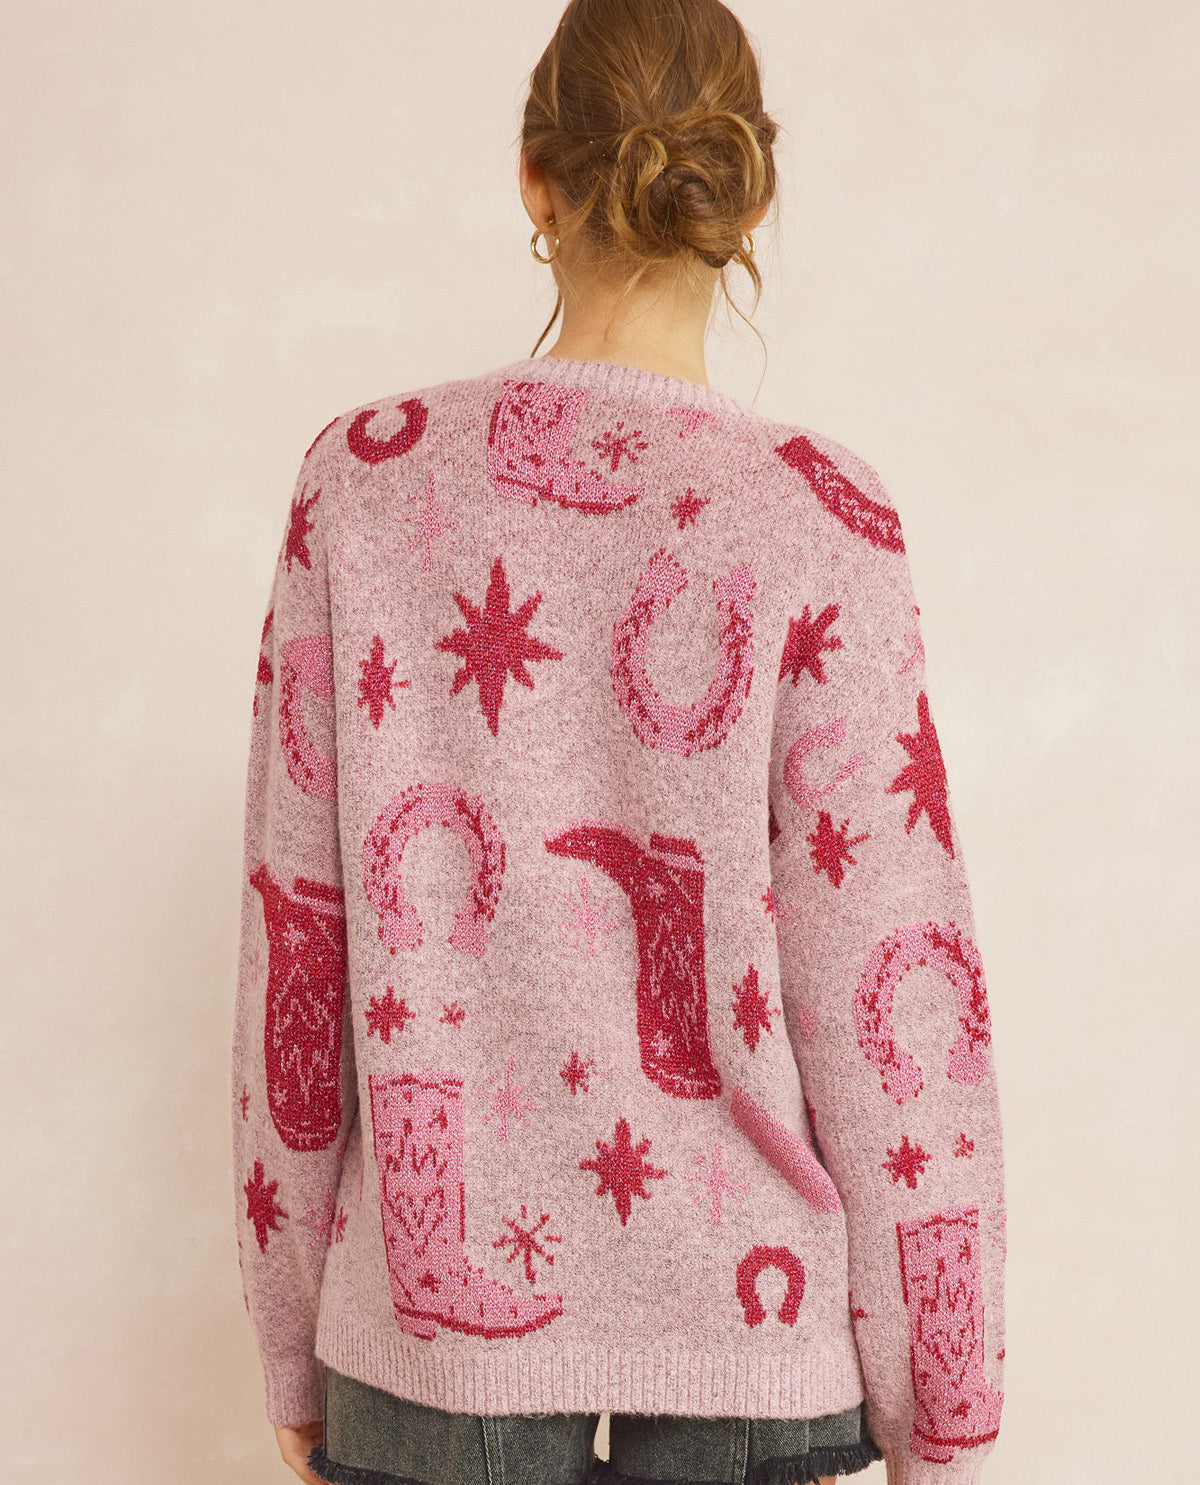 PLUS Western Patterned Sweater